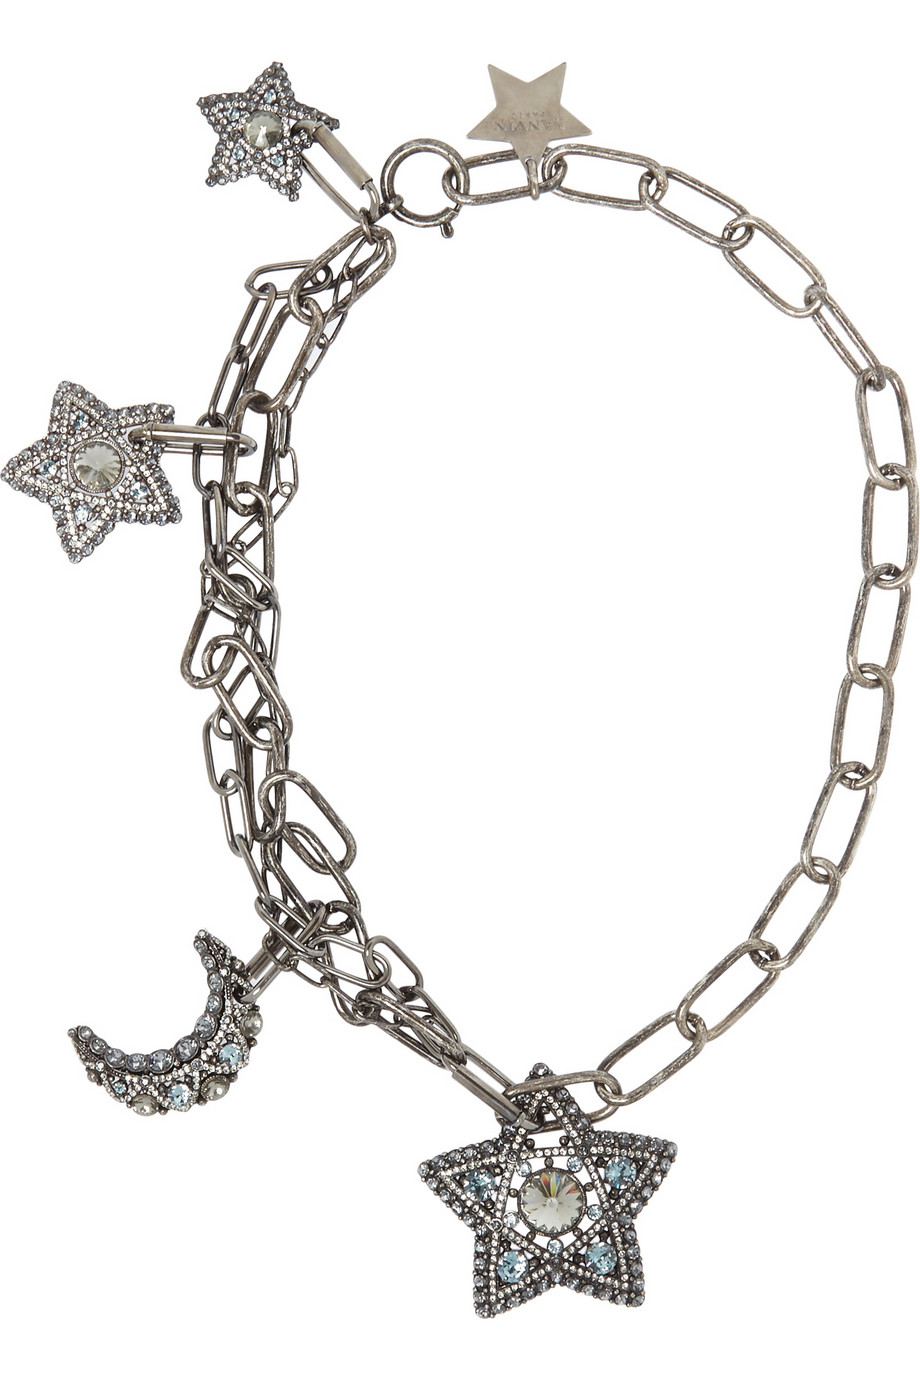   Lanvin  necklace - was $1,690, now $1,014 